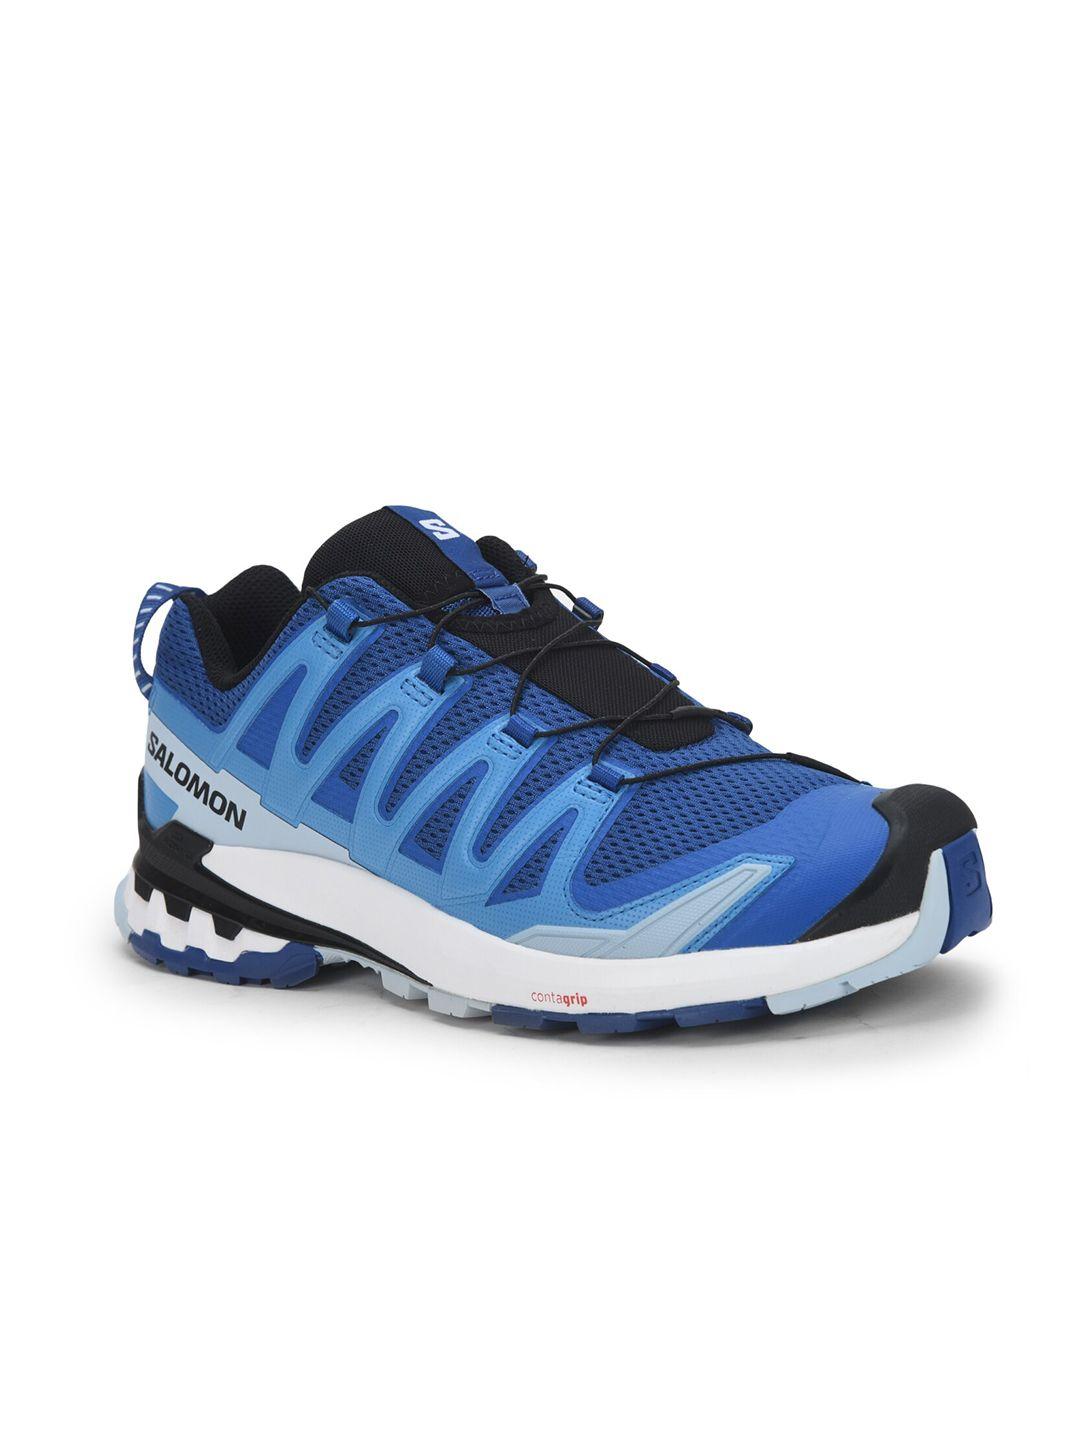 salomon-men-blue-running-shoes